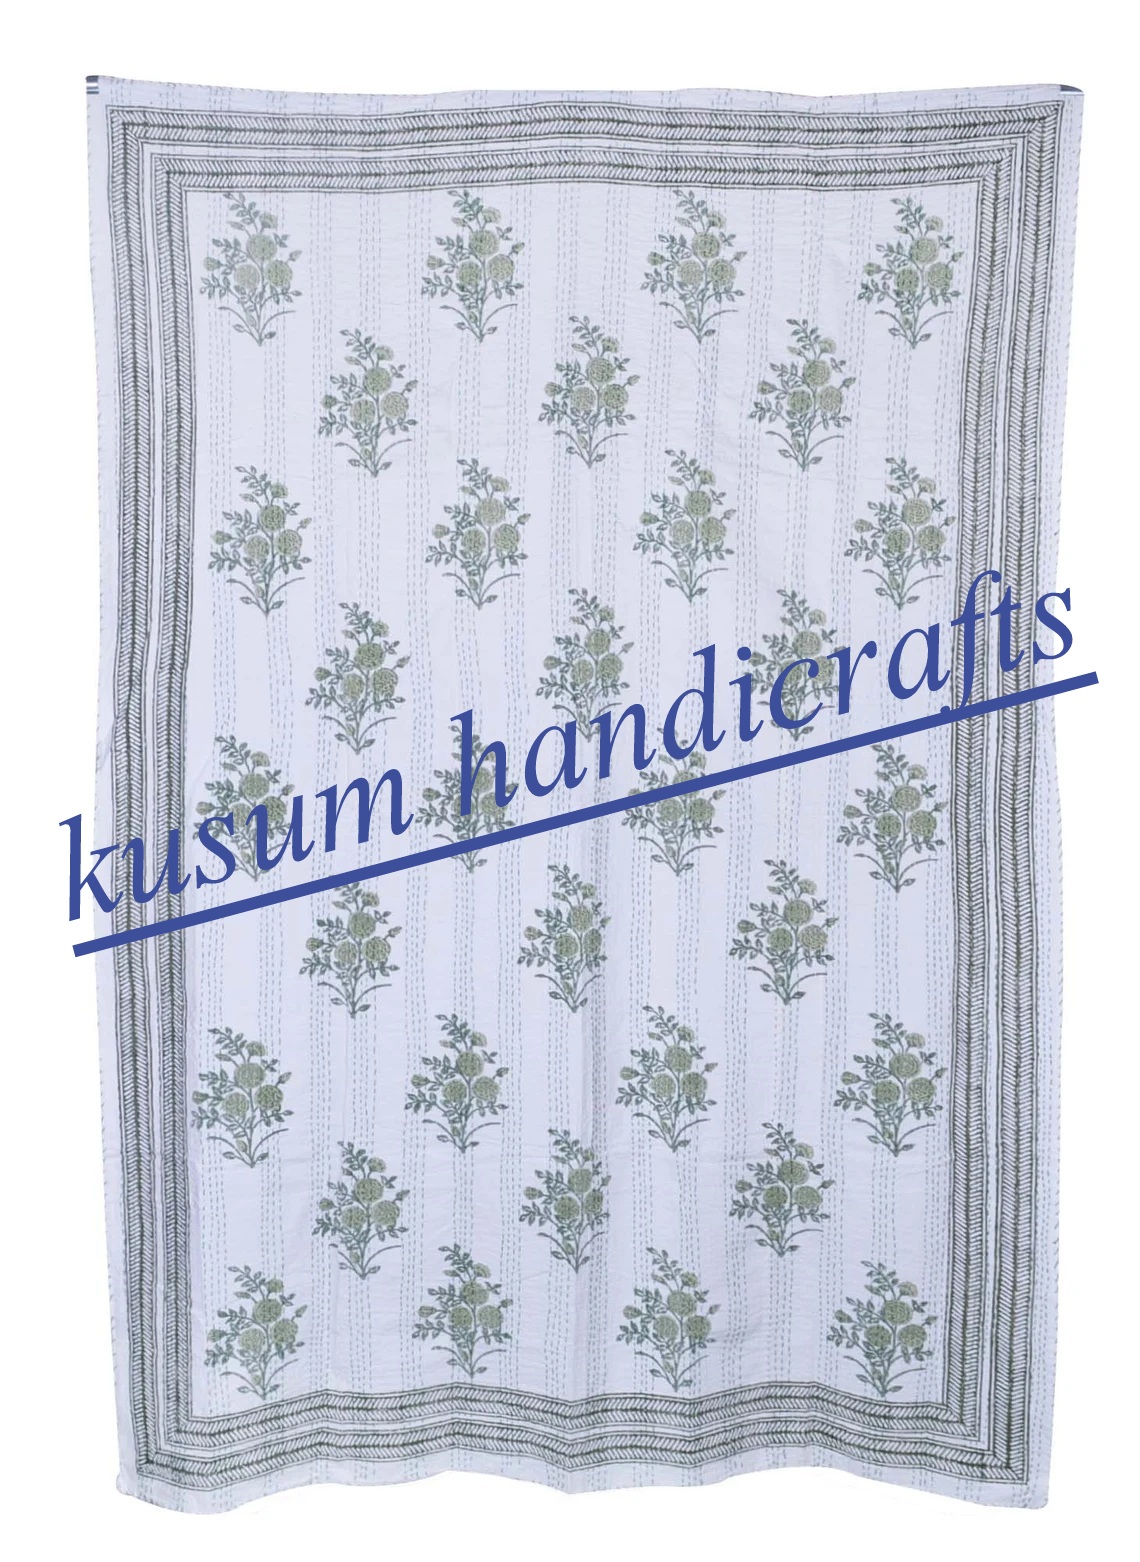 White Indian Cotton Floral Print Kantha Quilt Throw Blanket Bedspread Vintage Throw Gudari Cotton Handmade Kantha Quilt